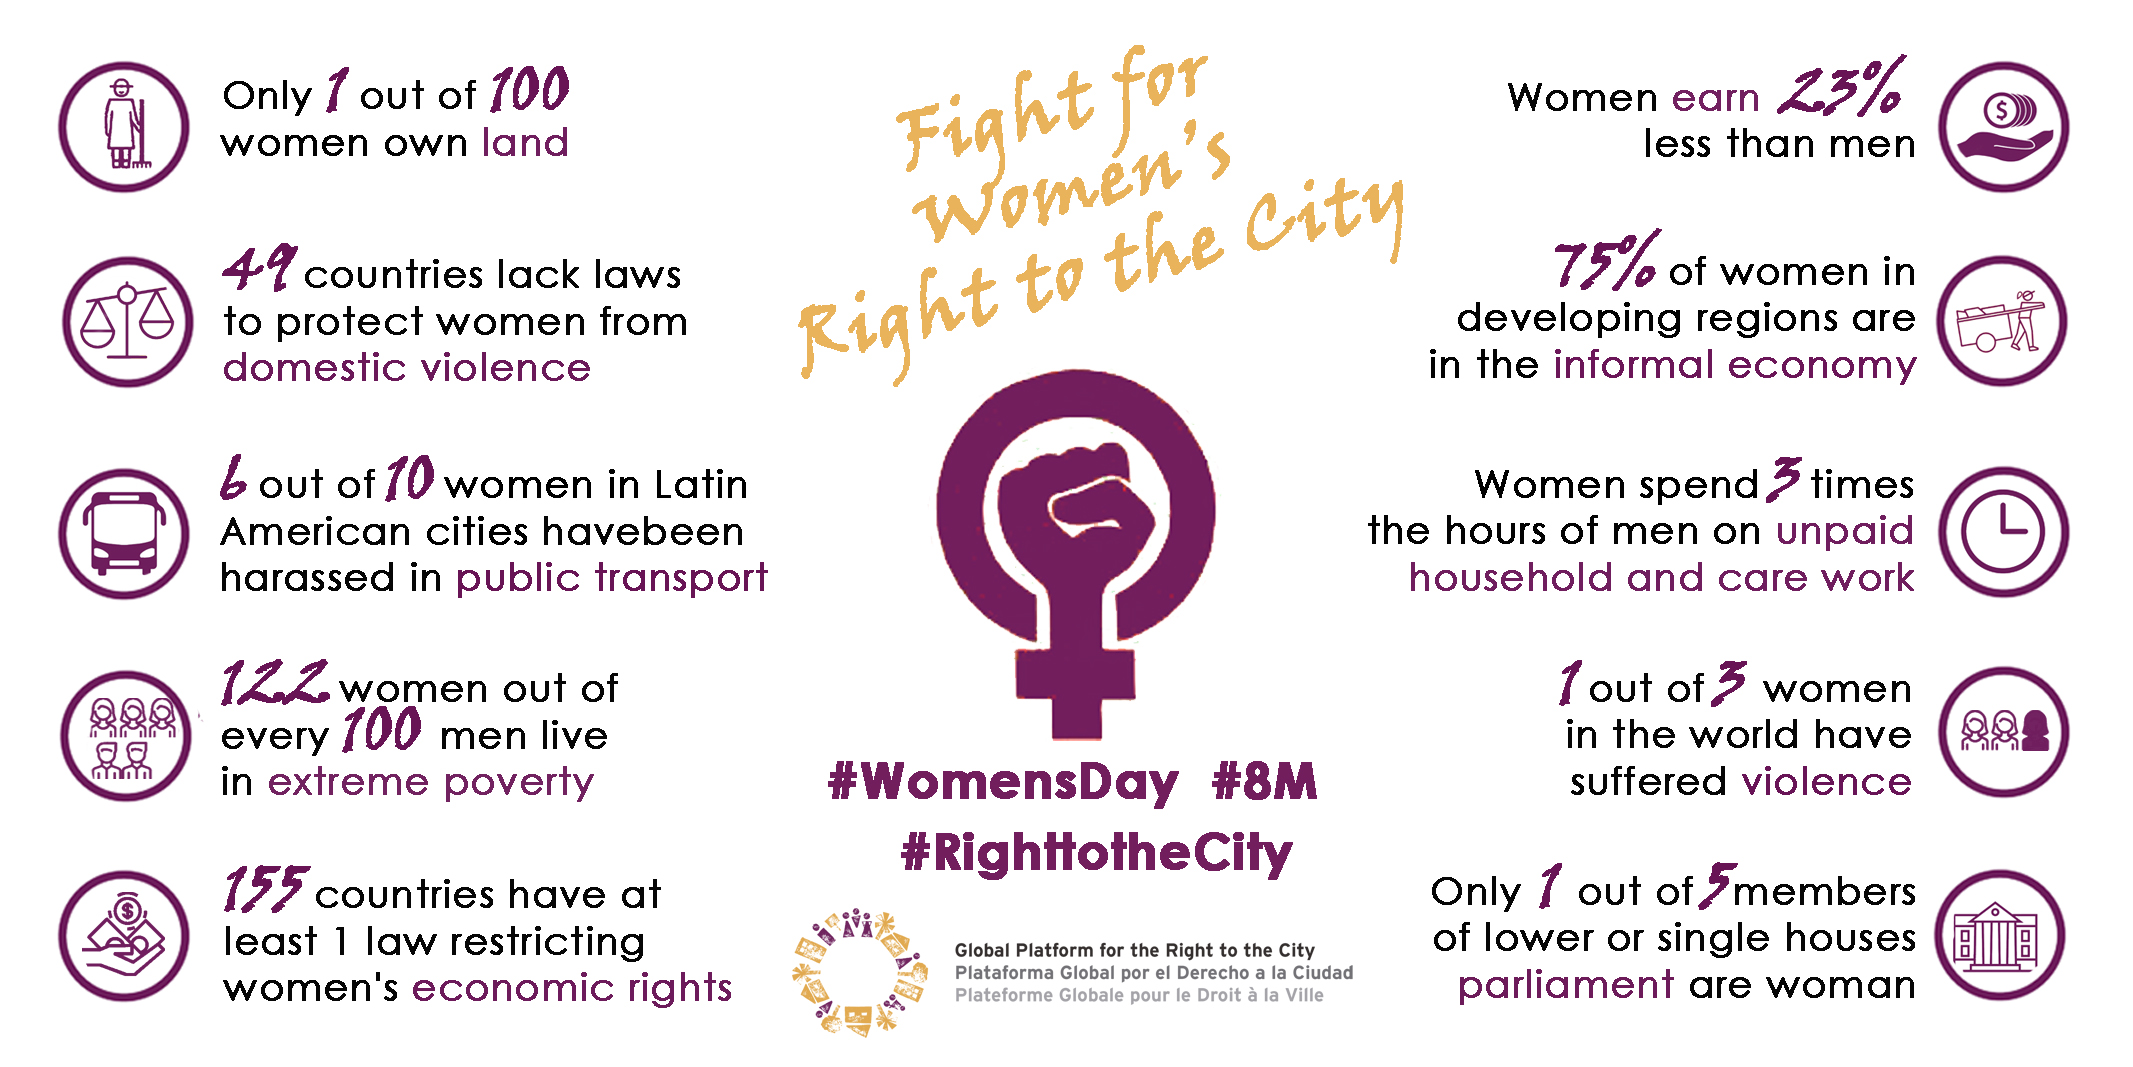 Women’s Right to the City Manifesto